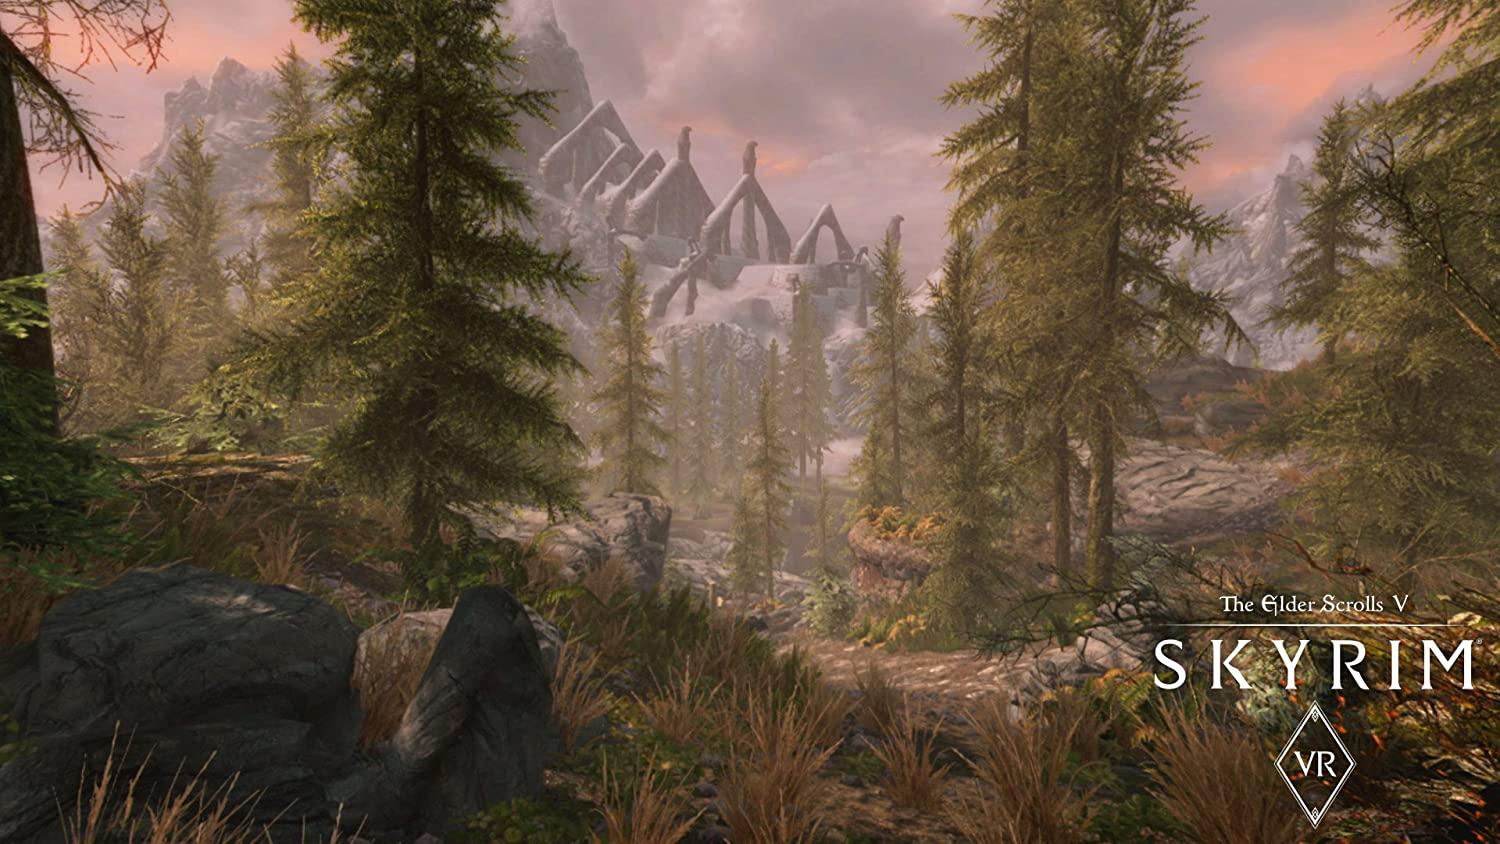 The Elder Scrolls V: Skyrim VR (PS4) (Pre-owned) - GameStore.mt | Powered by Flutisat